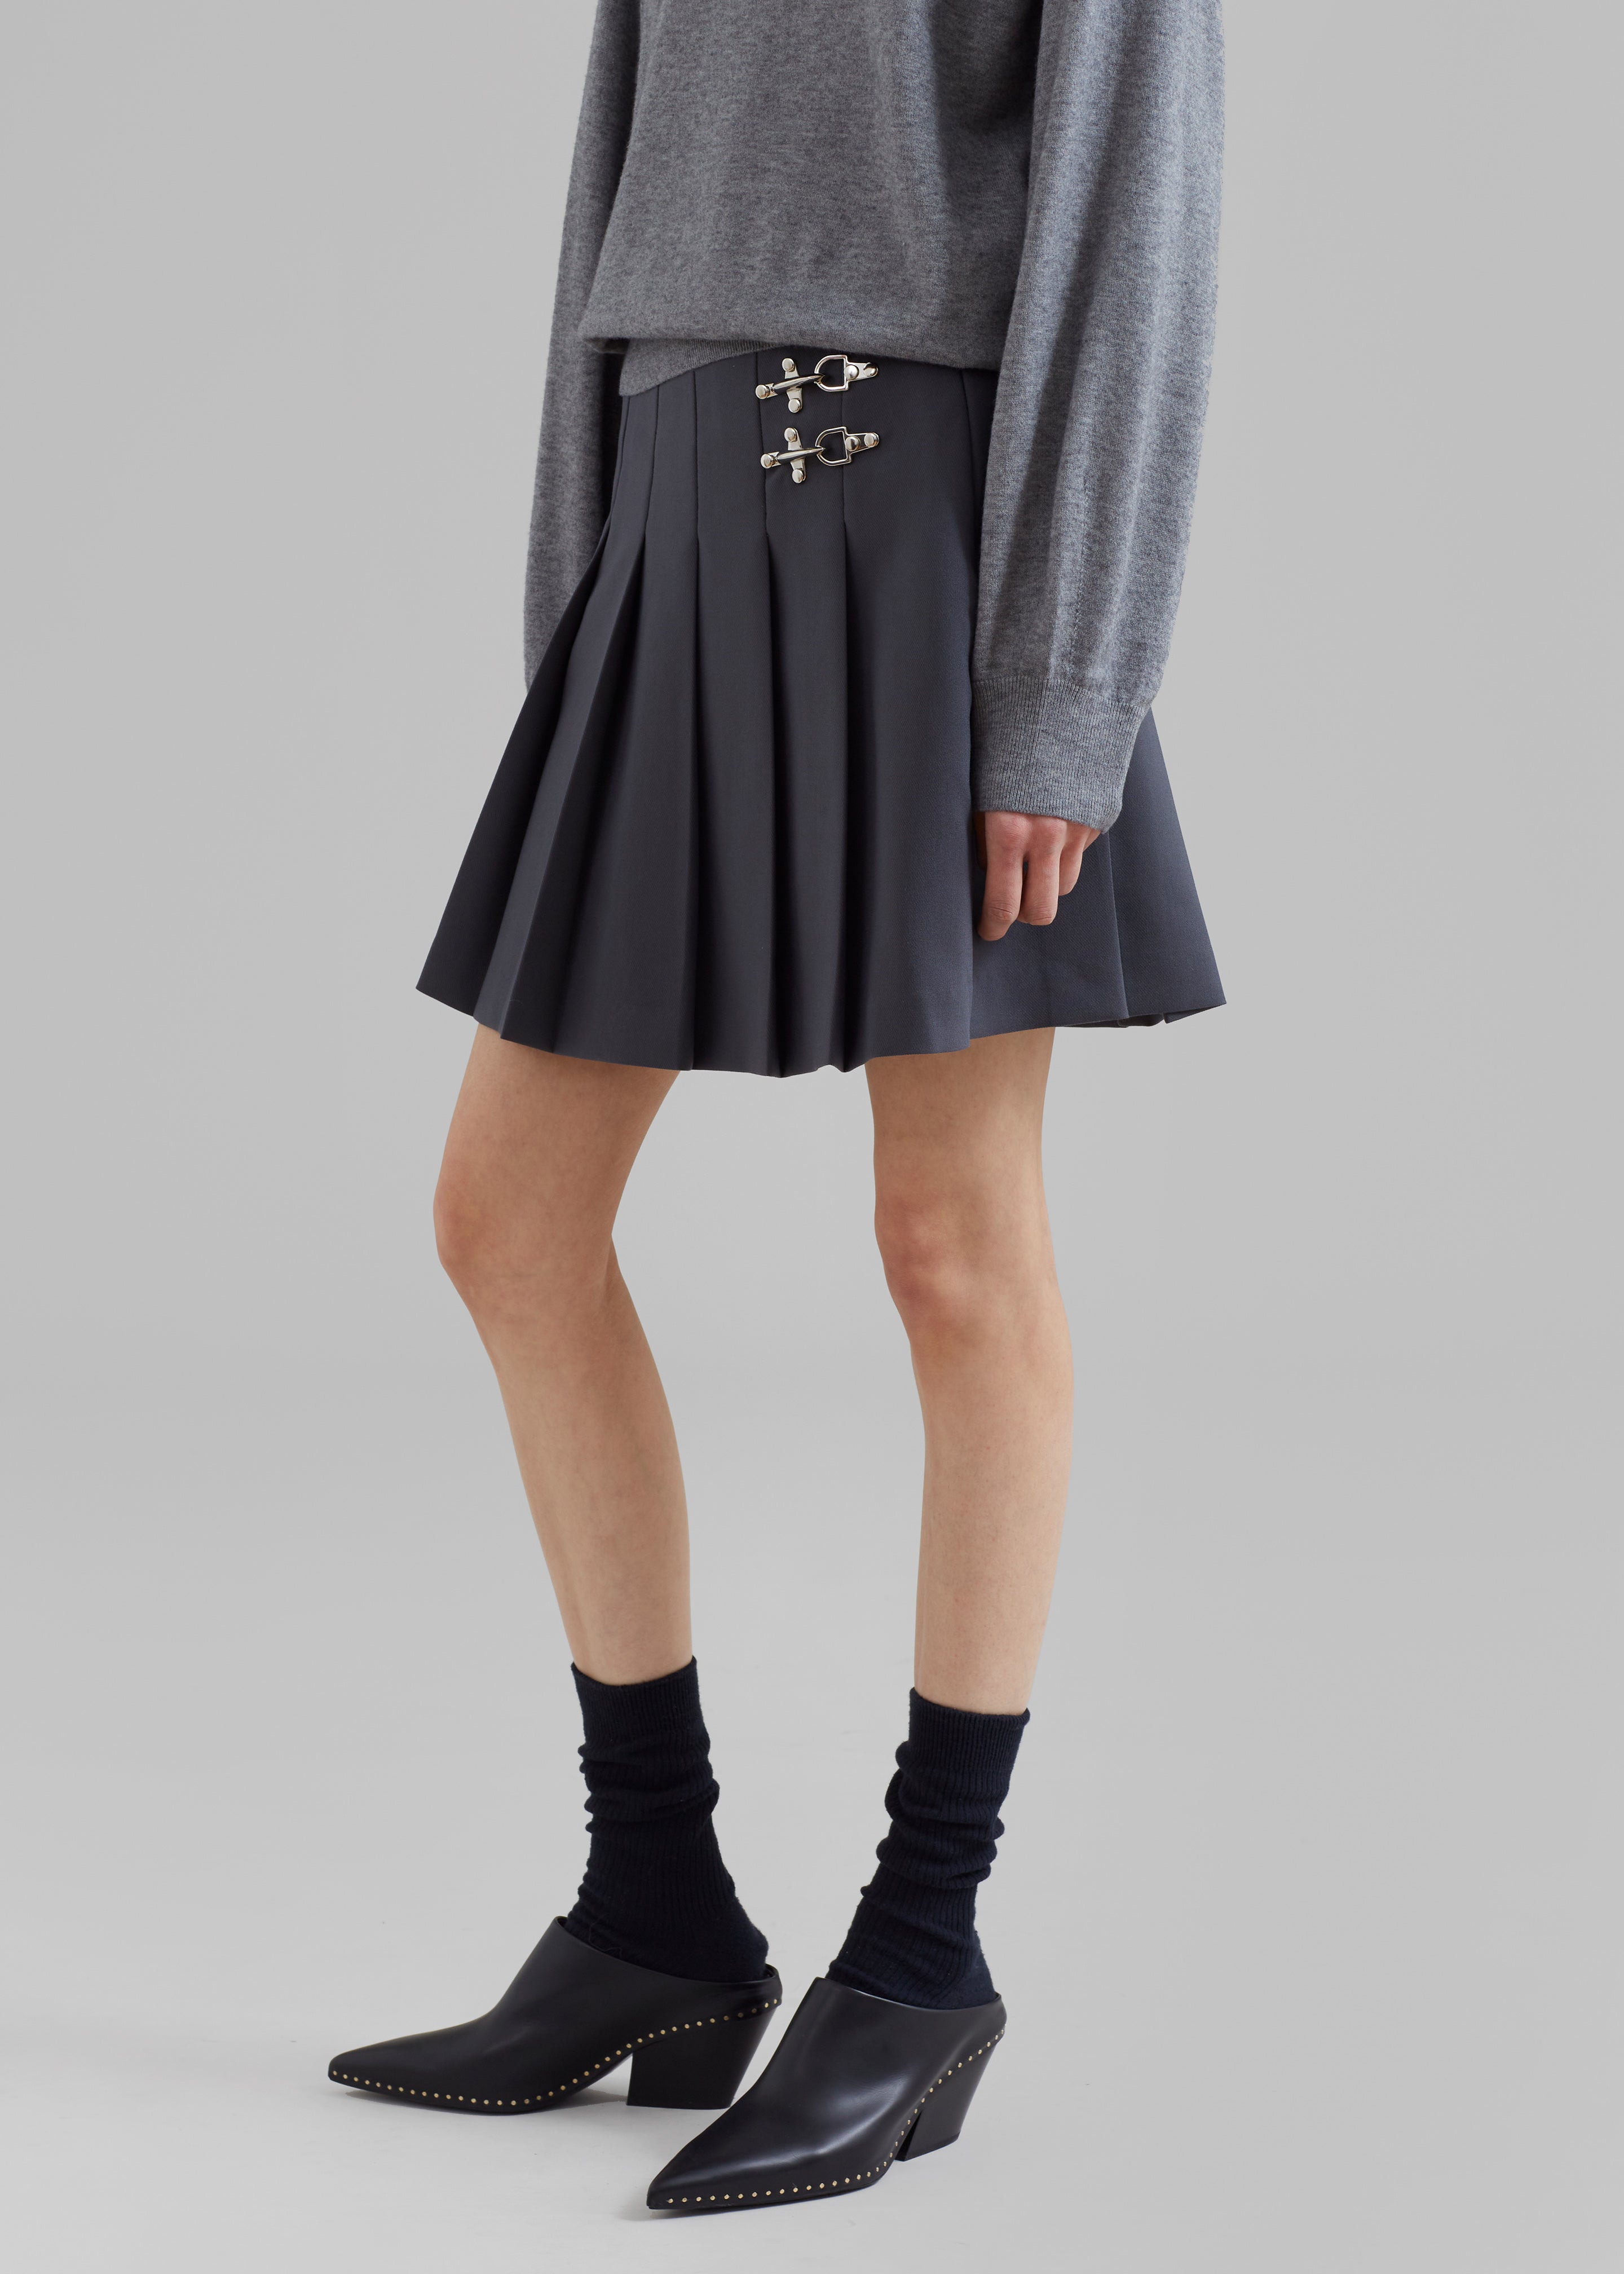 Nyra Pleated Skirt - Charcoal - 4